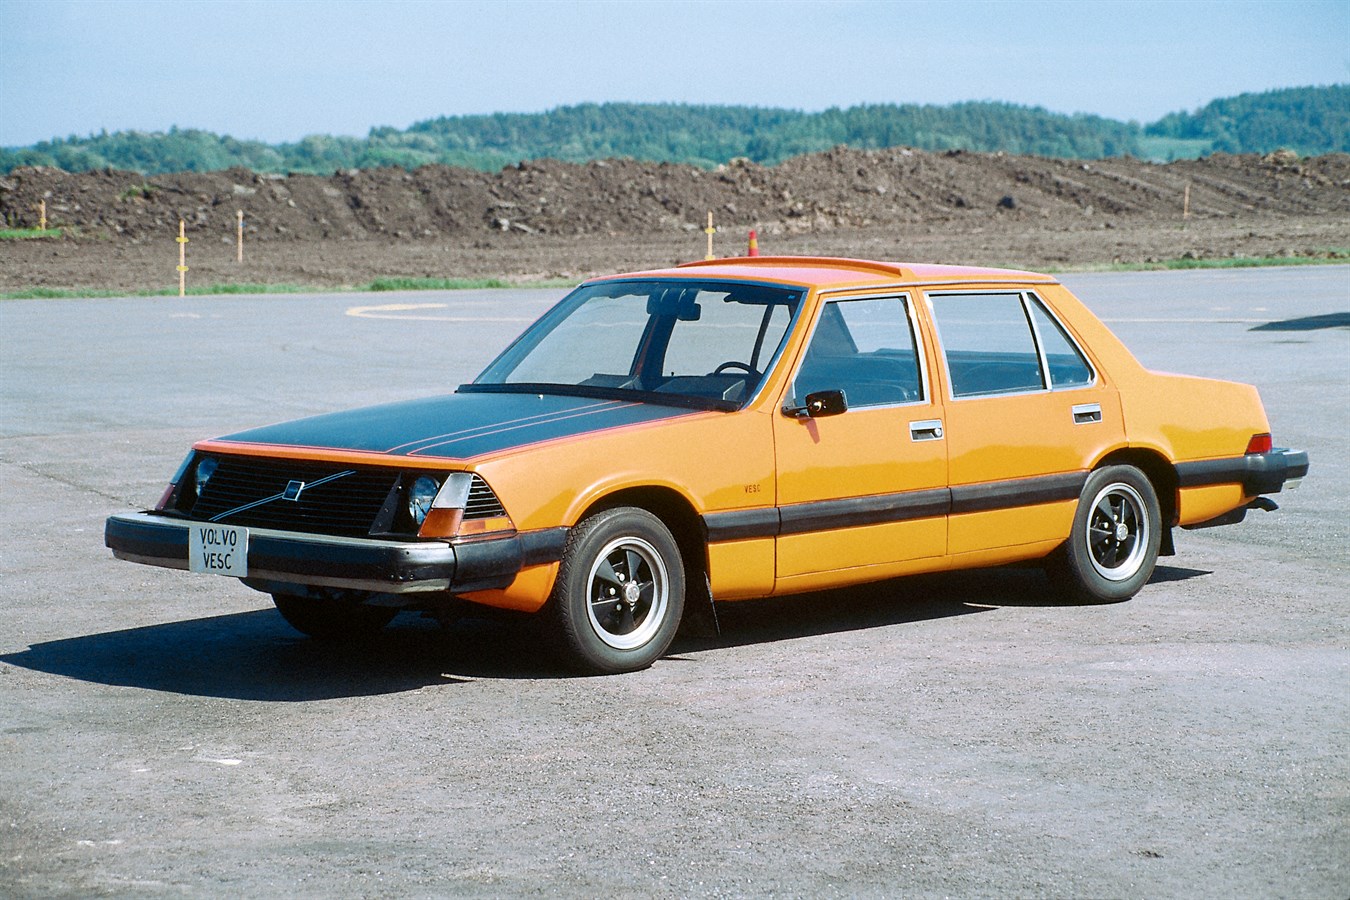 VESC (Volvo Experimental Safety Car), 1972